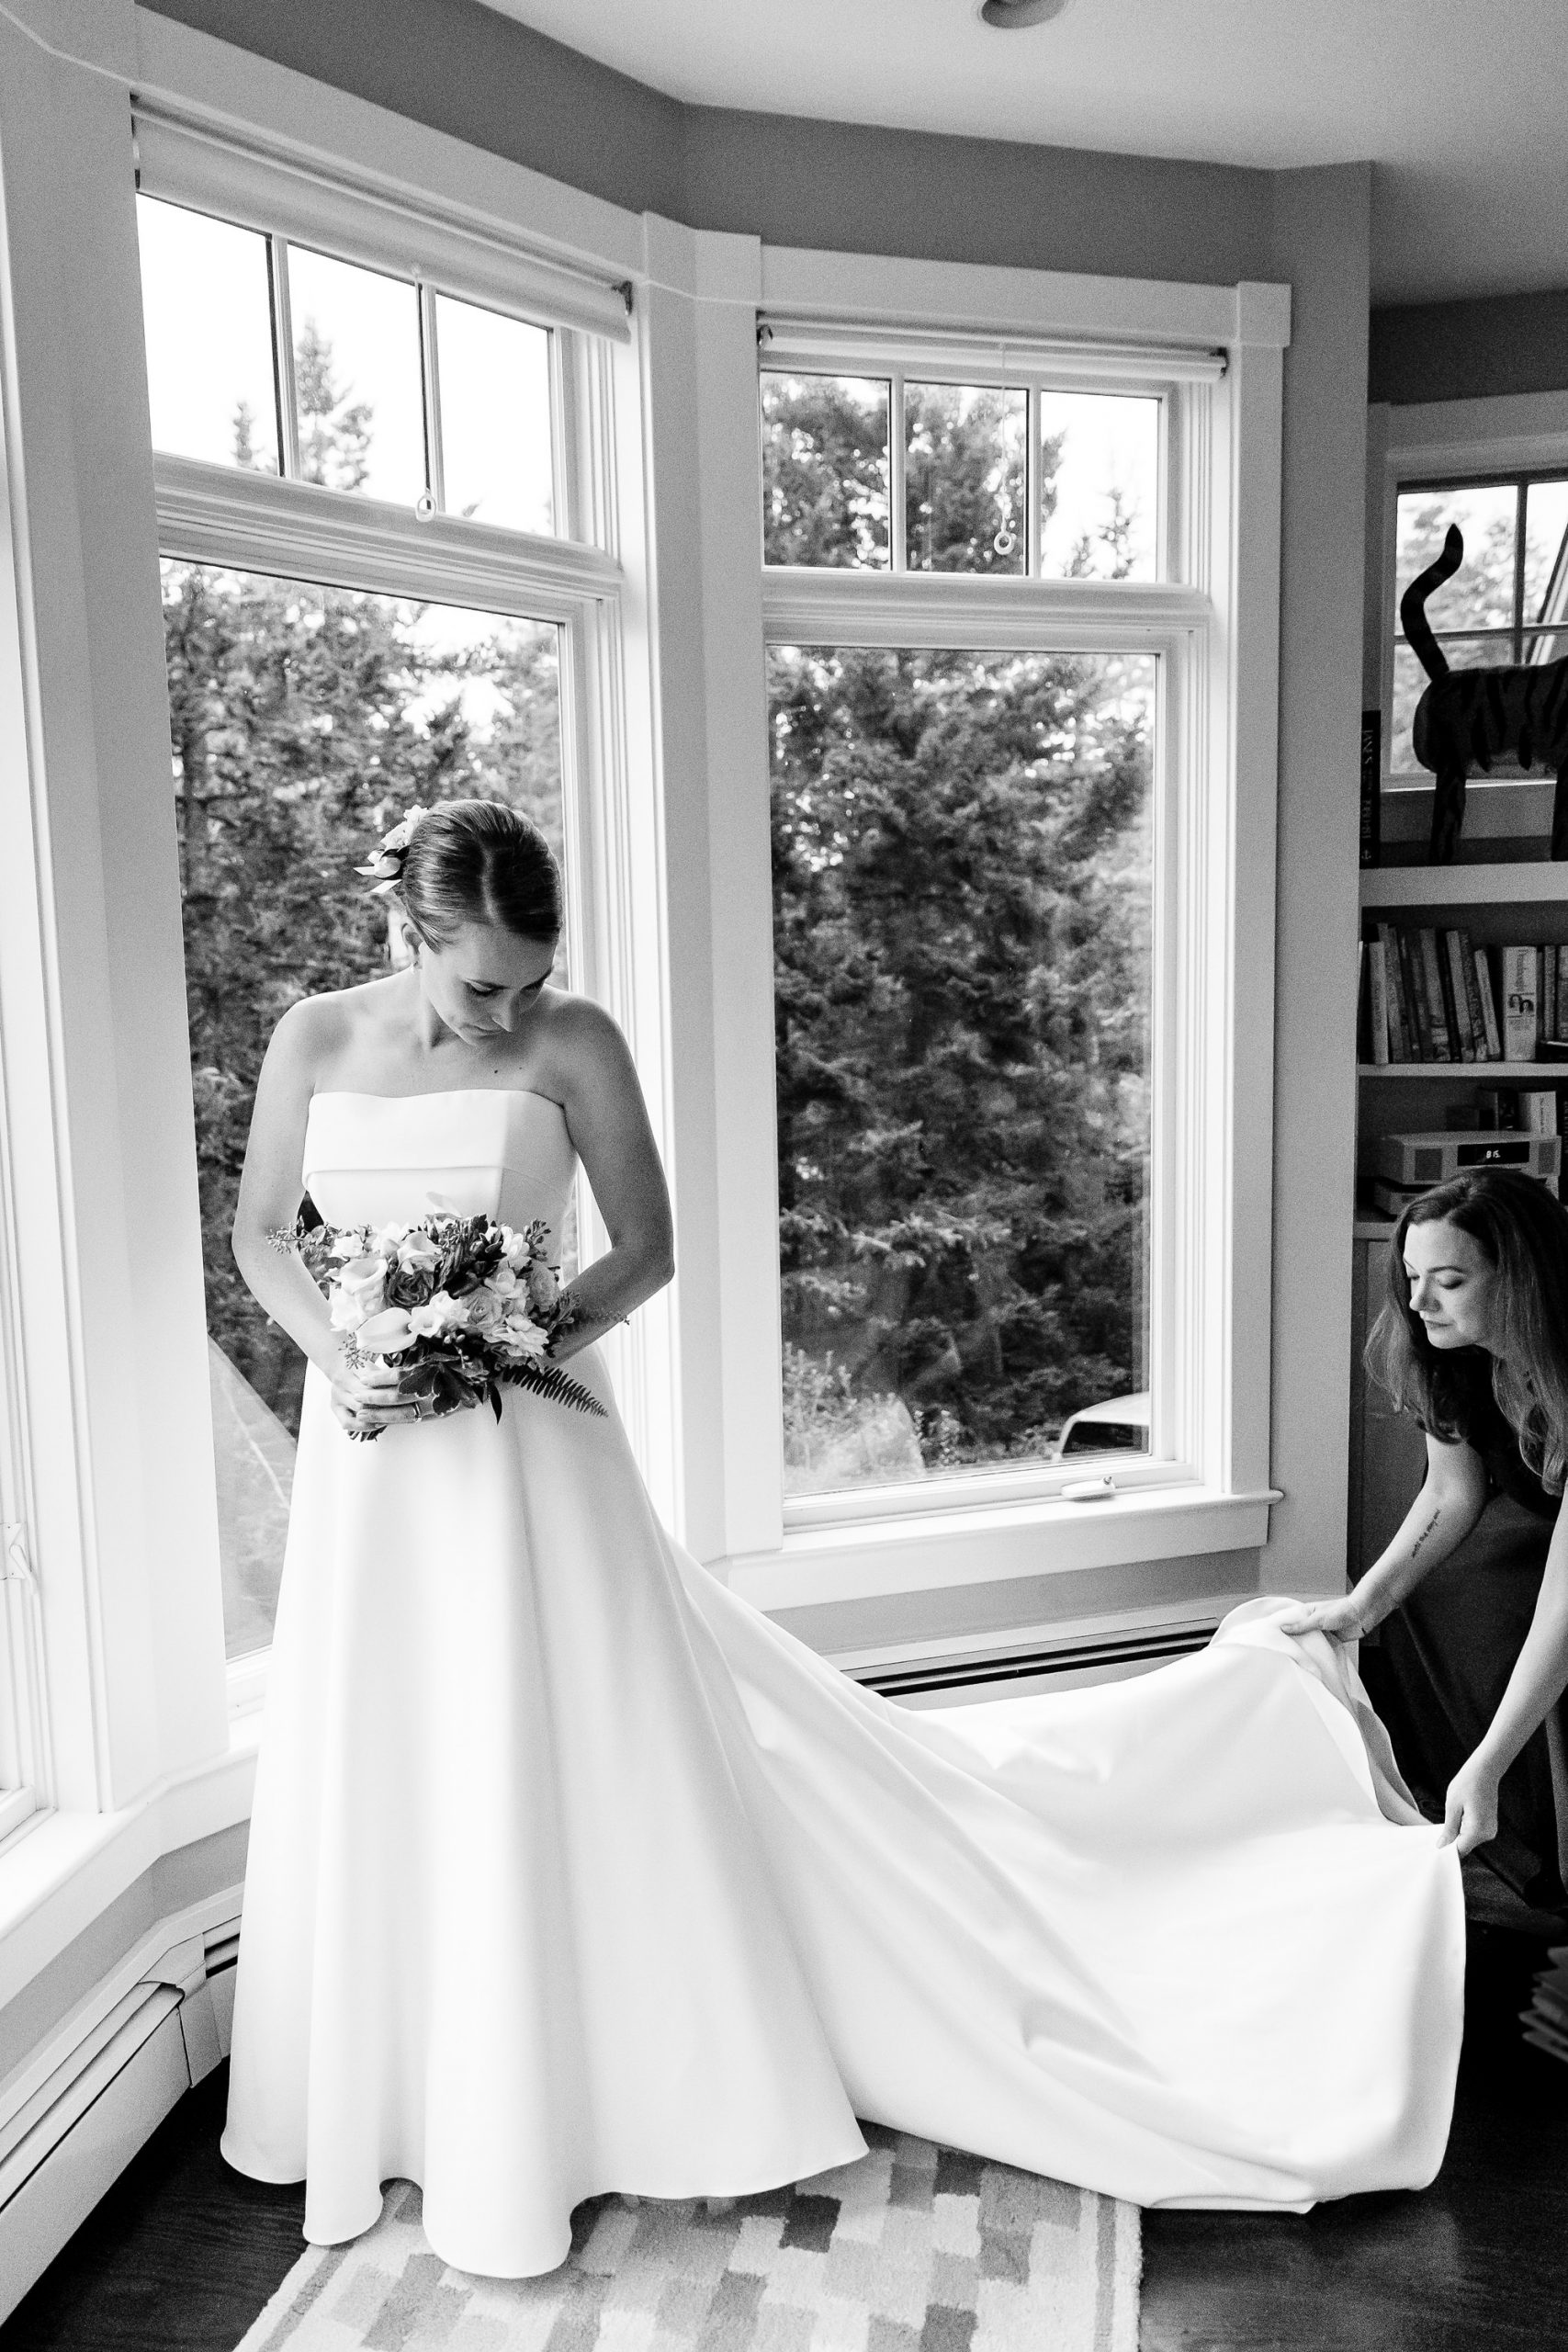 A wedding reception in Northeast Harbor, Maine